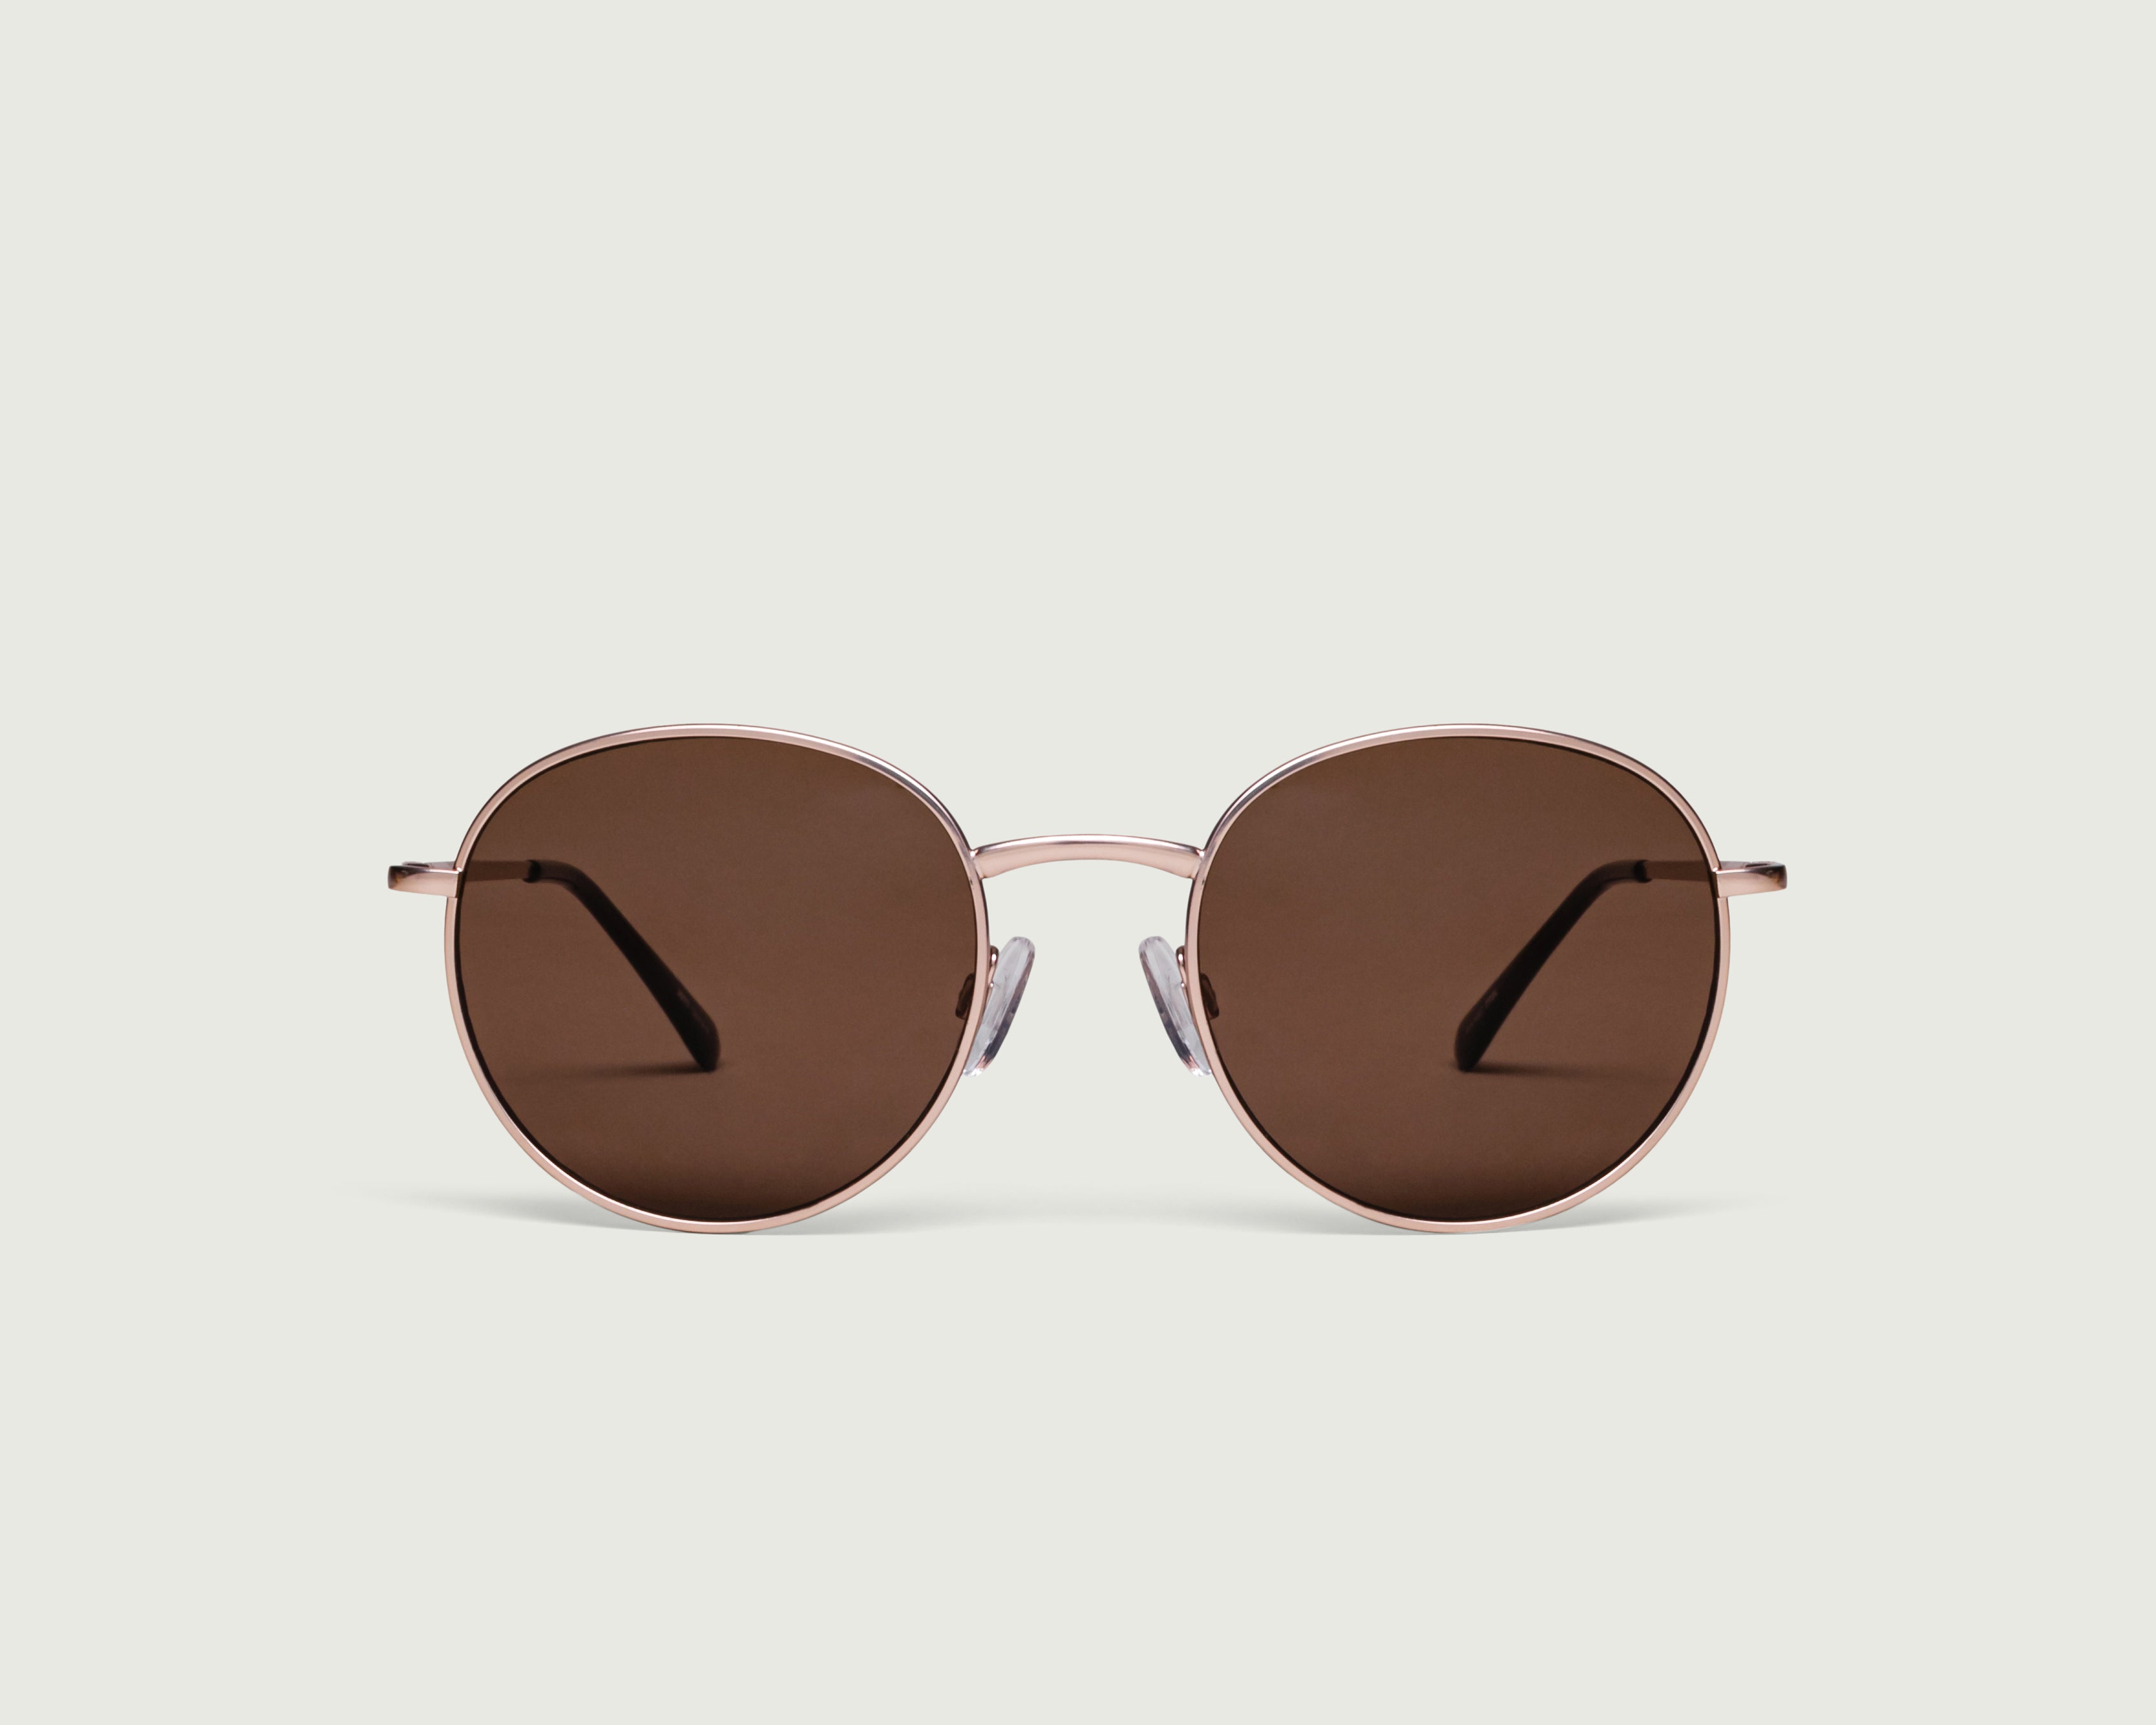 Sepia::Jett Sunglasses round brown metal front